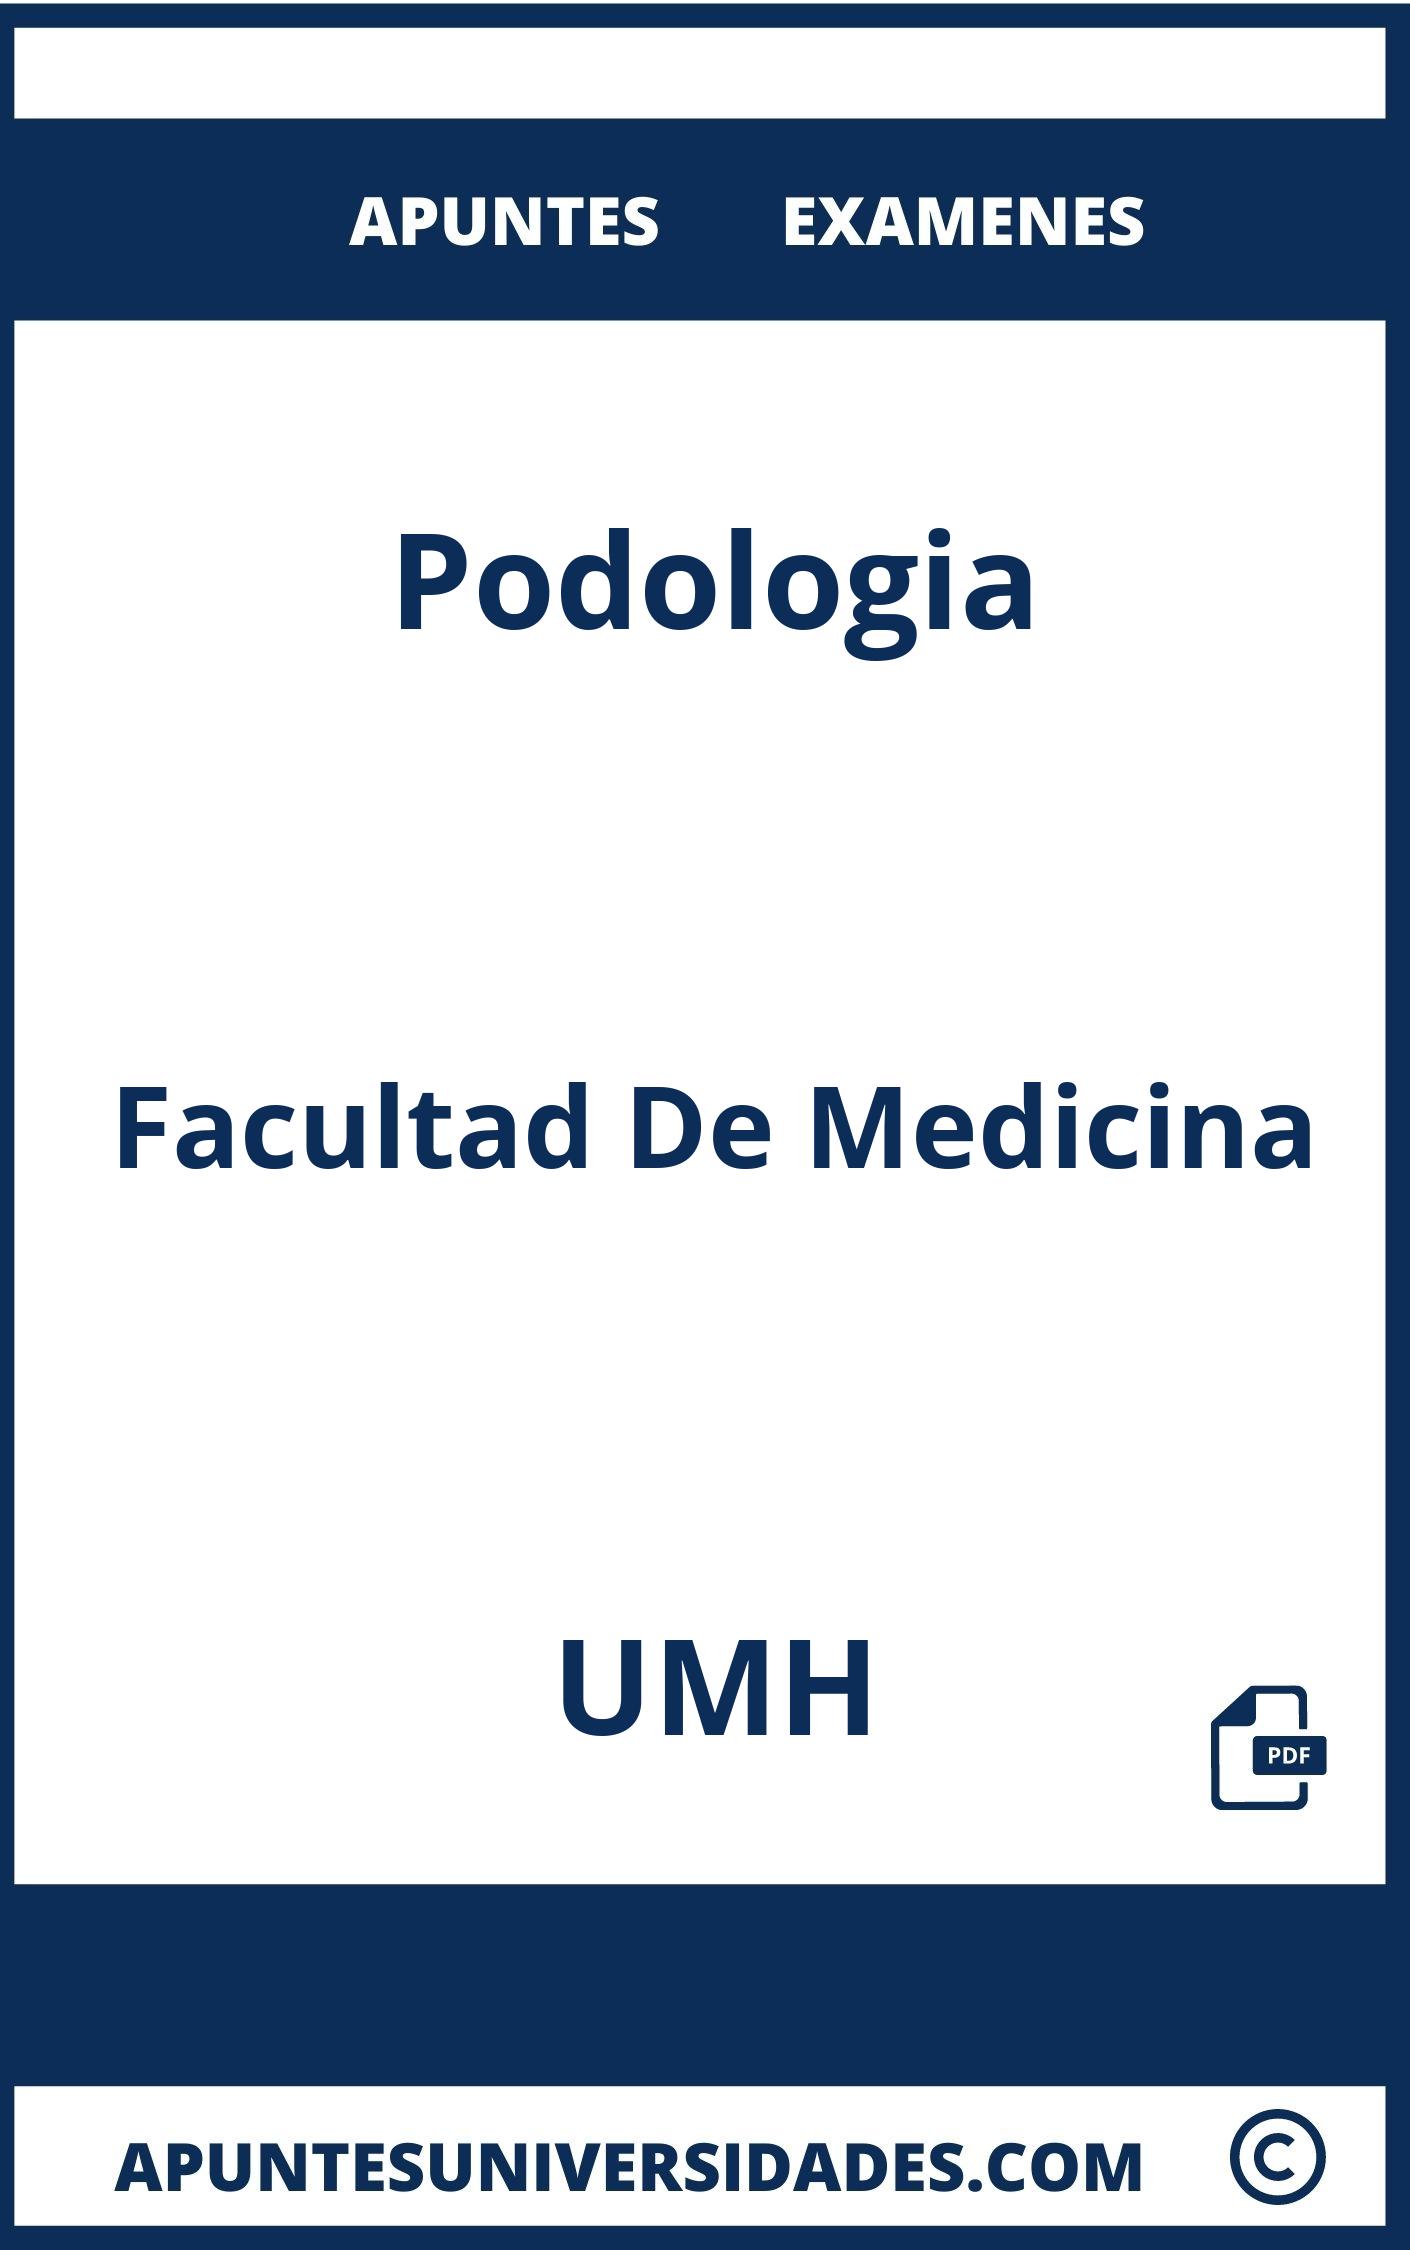 Apuntes y Examenes Podologia UMH